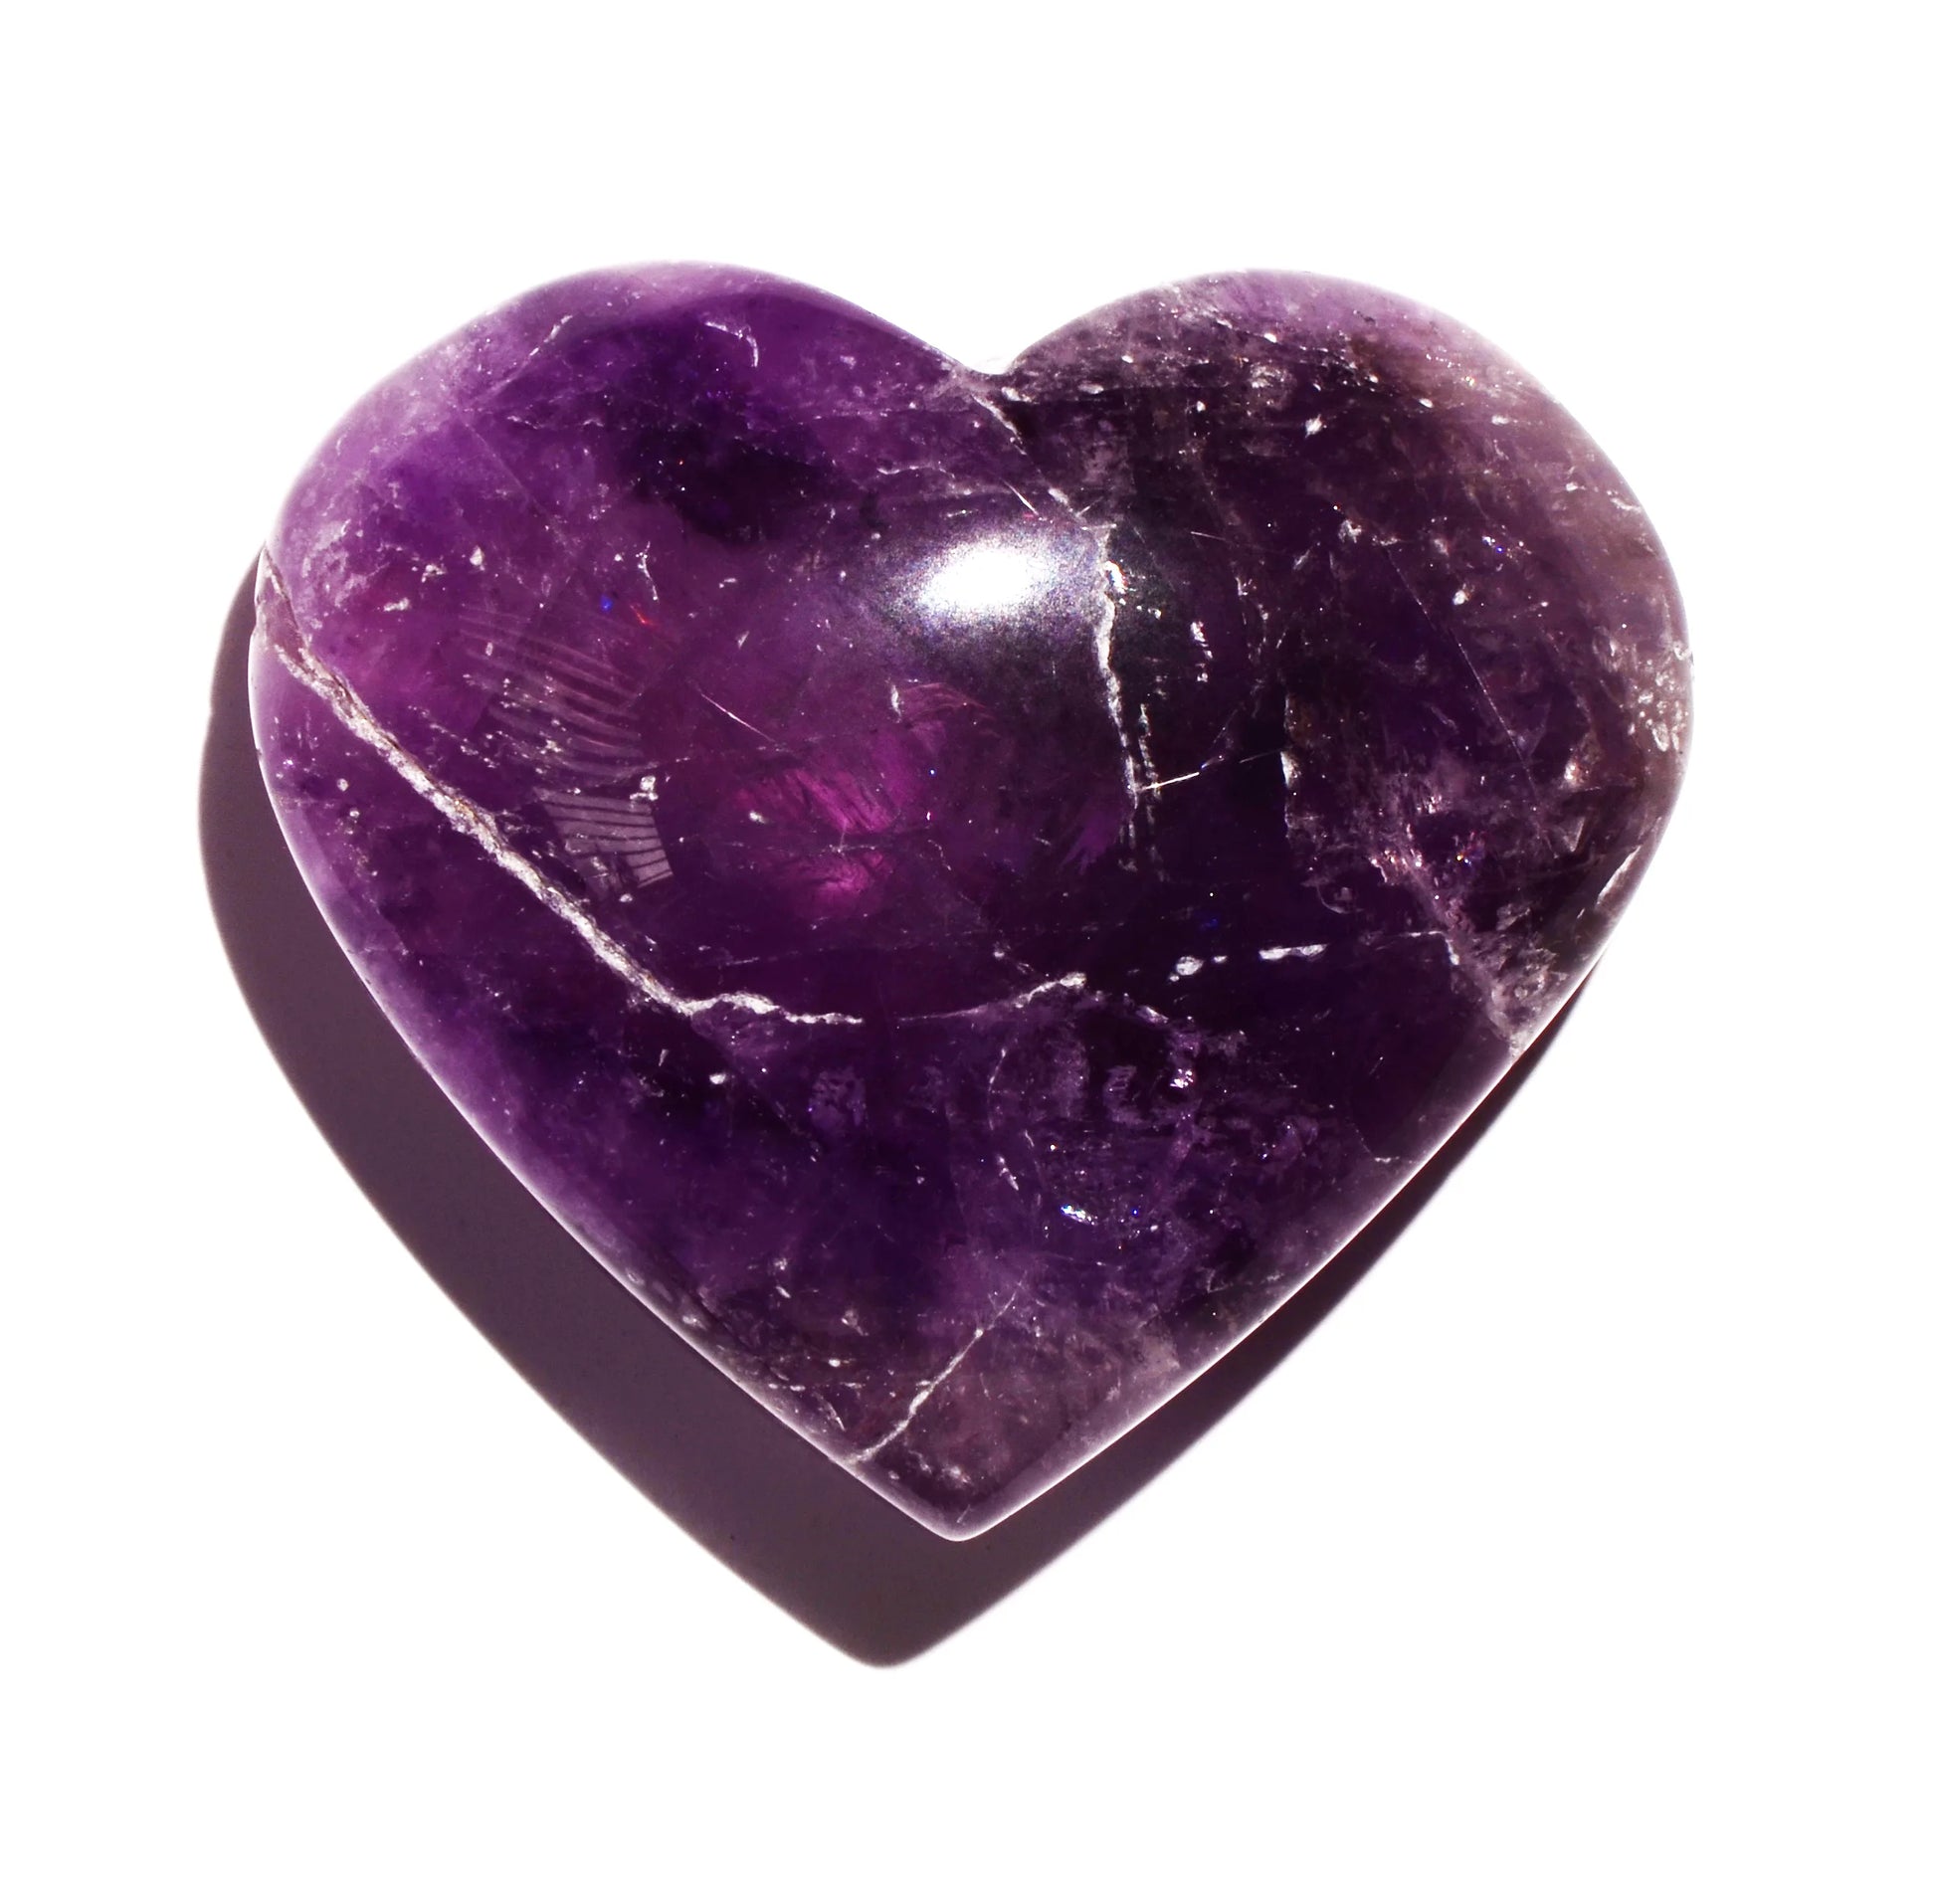 healing crystals: amethyst heart